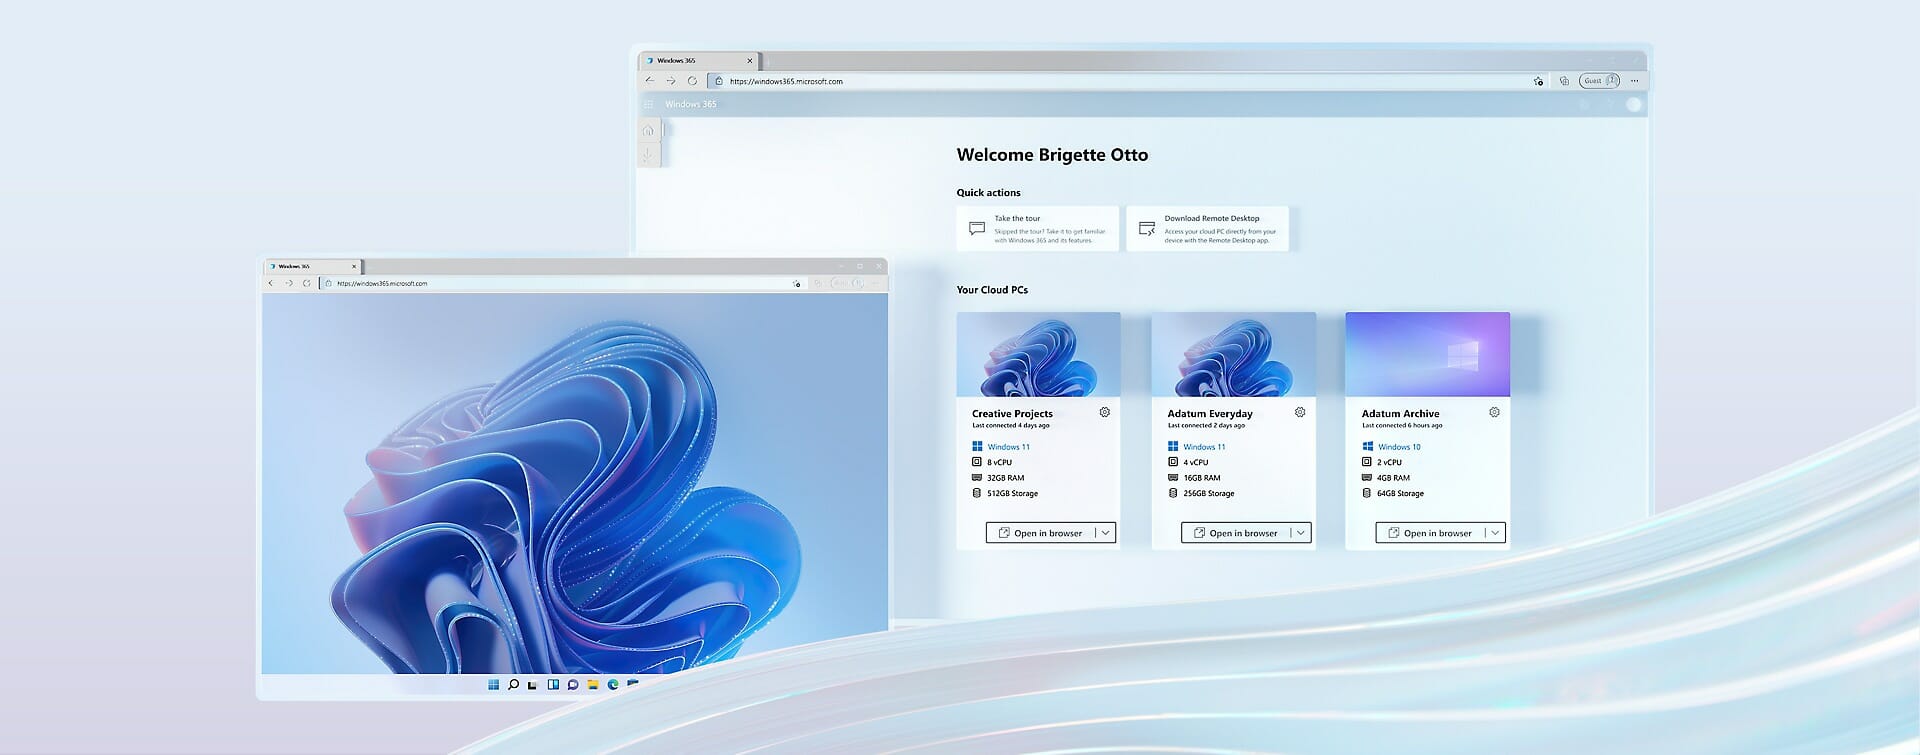 Windows 365 - Select desktop screen